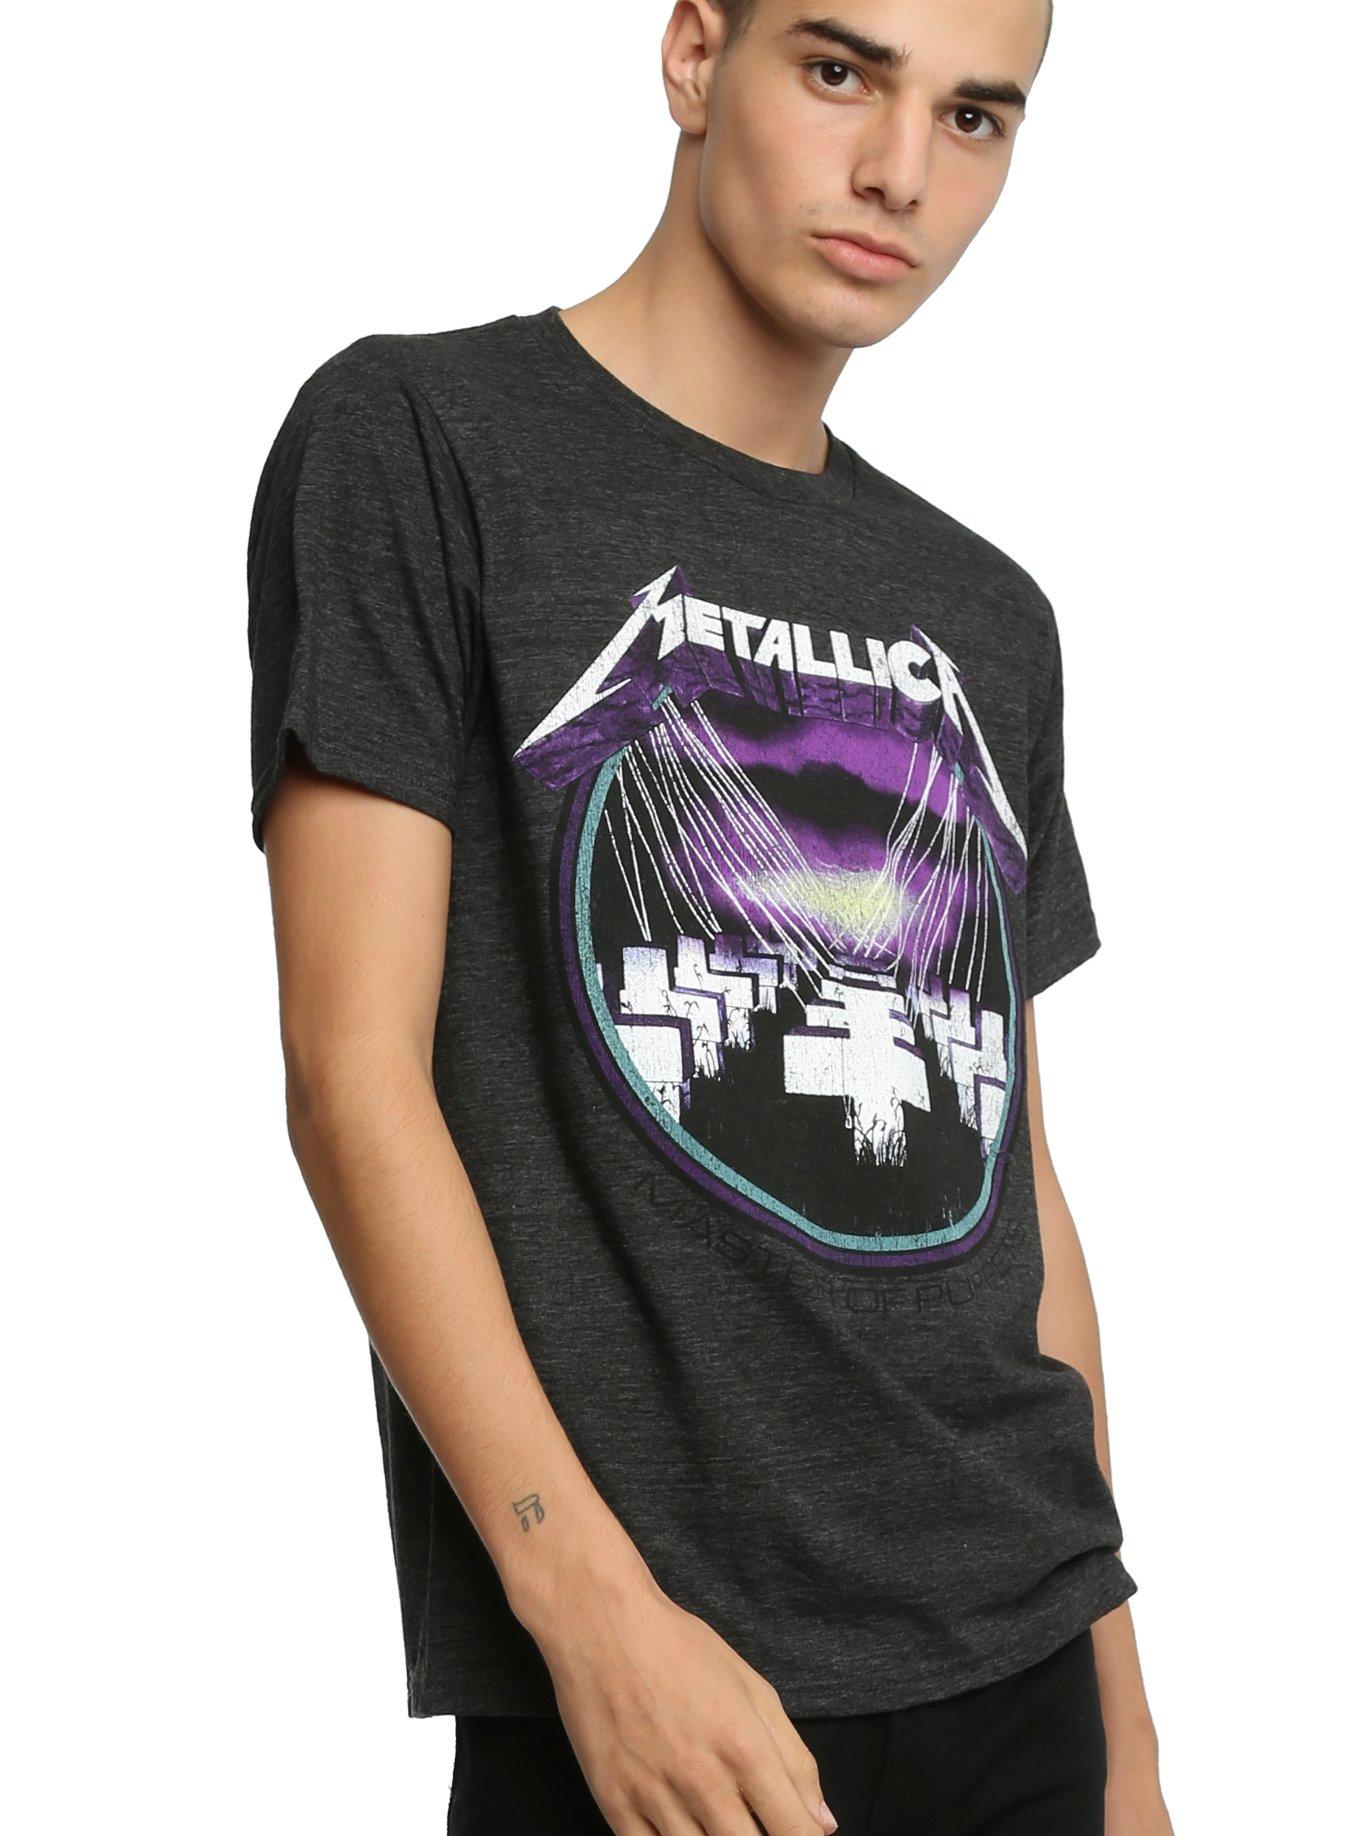 Metallica T-Shirt, Metallica Band Shirt - Ink In Action